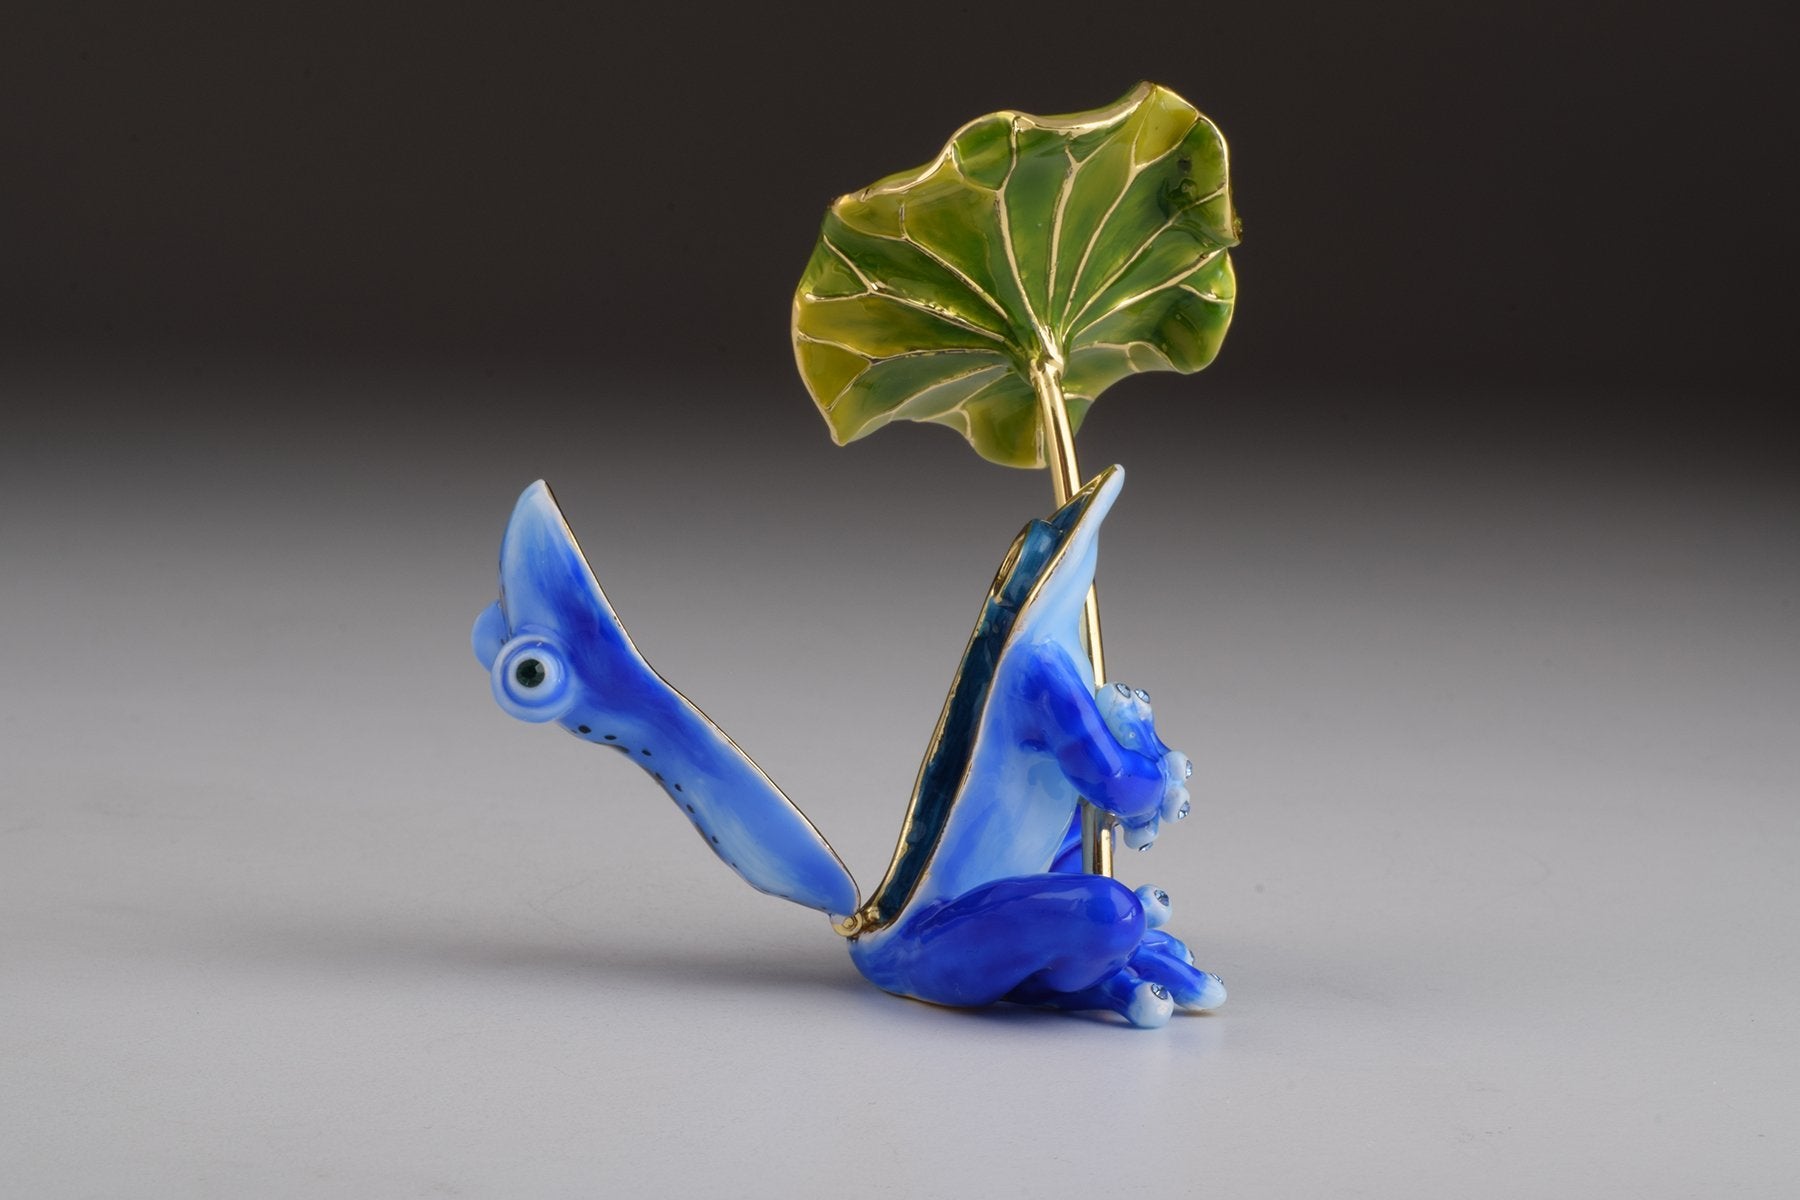 Keren Kopal Blue Frog with Umbrella Trinket Box  76.50